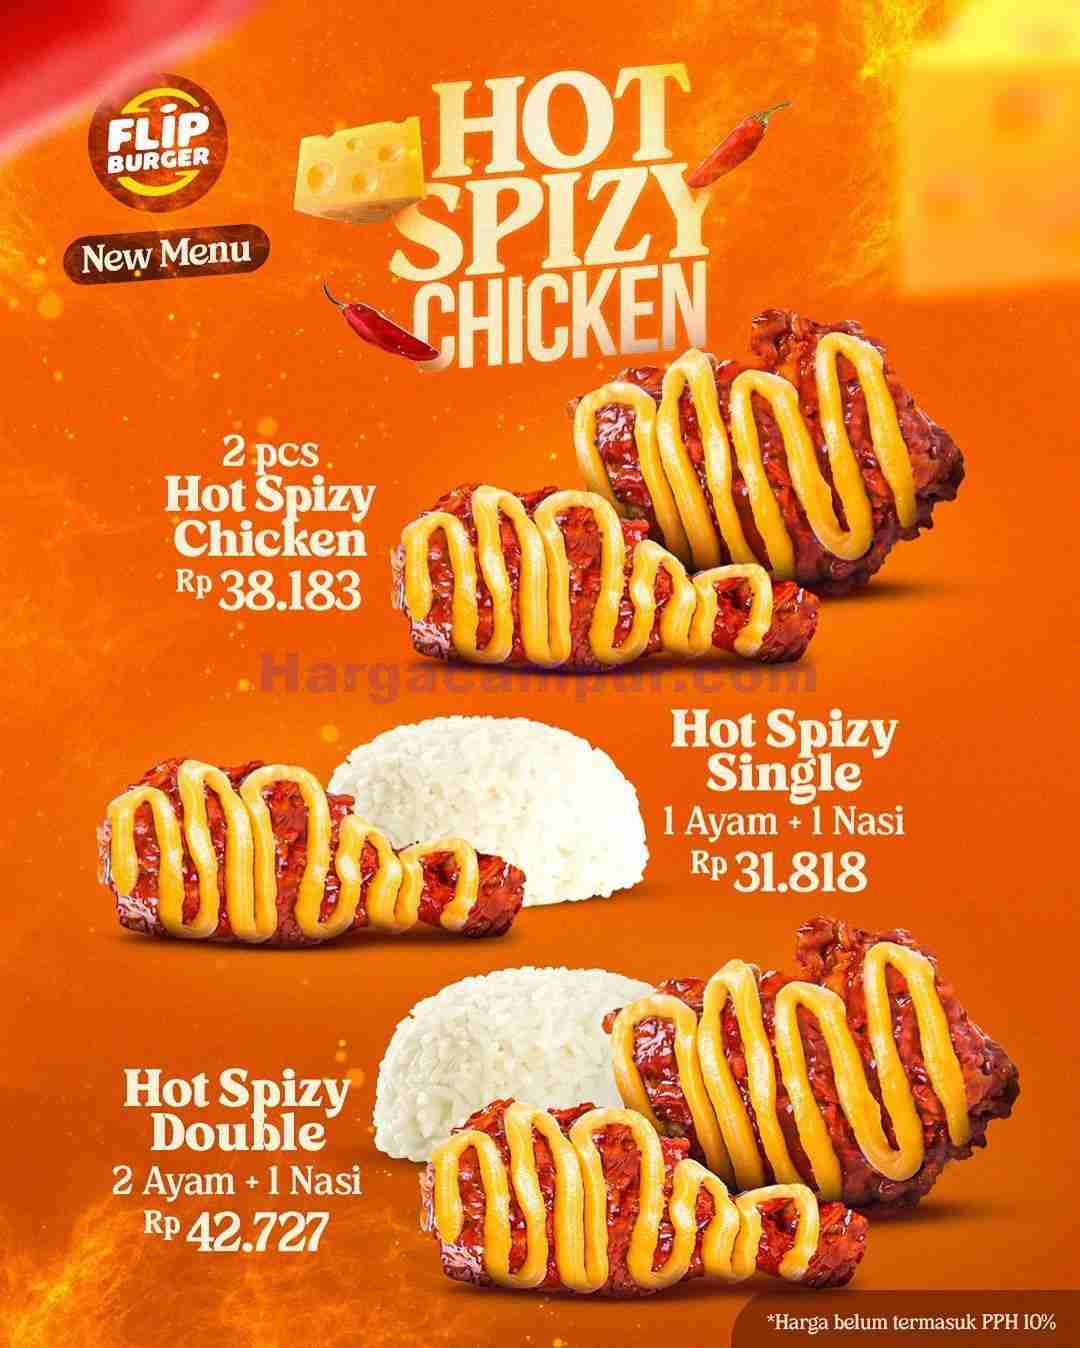 Harga Promo Flip Burger Menu Baru Hot Spizy Chicken 2